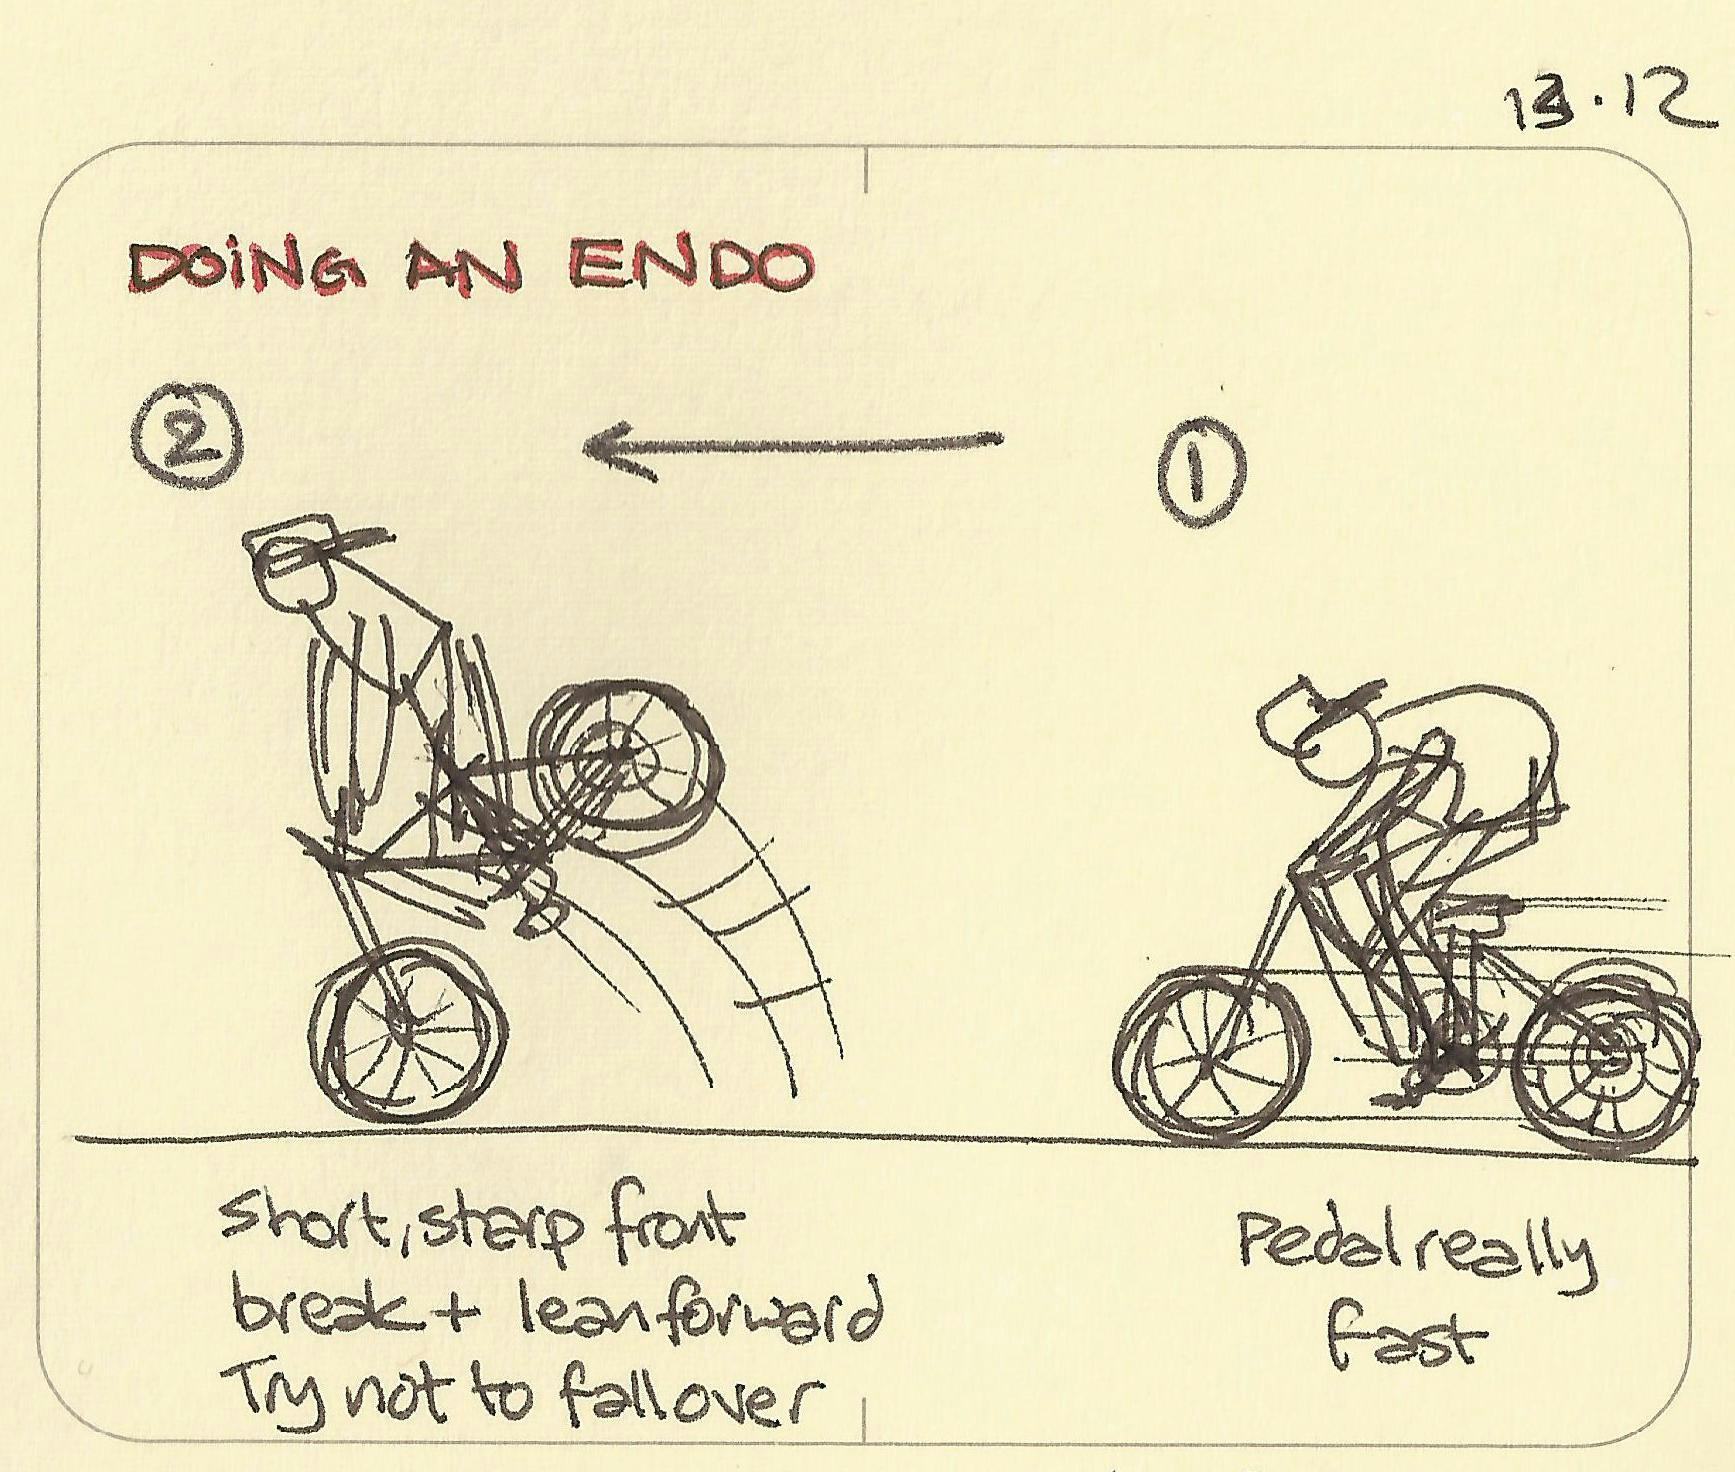 Doing an endo - Sketchplanations